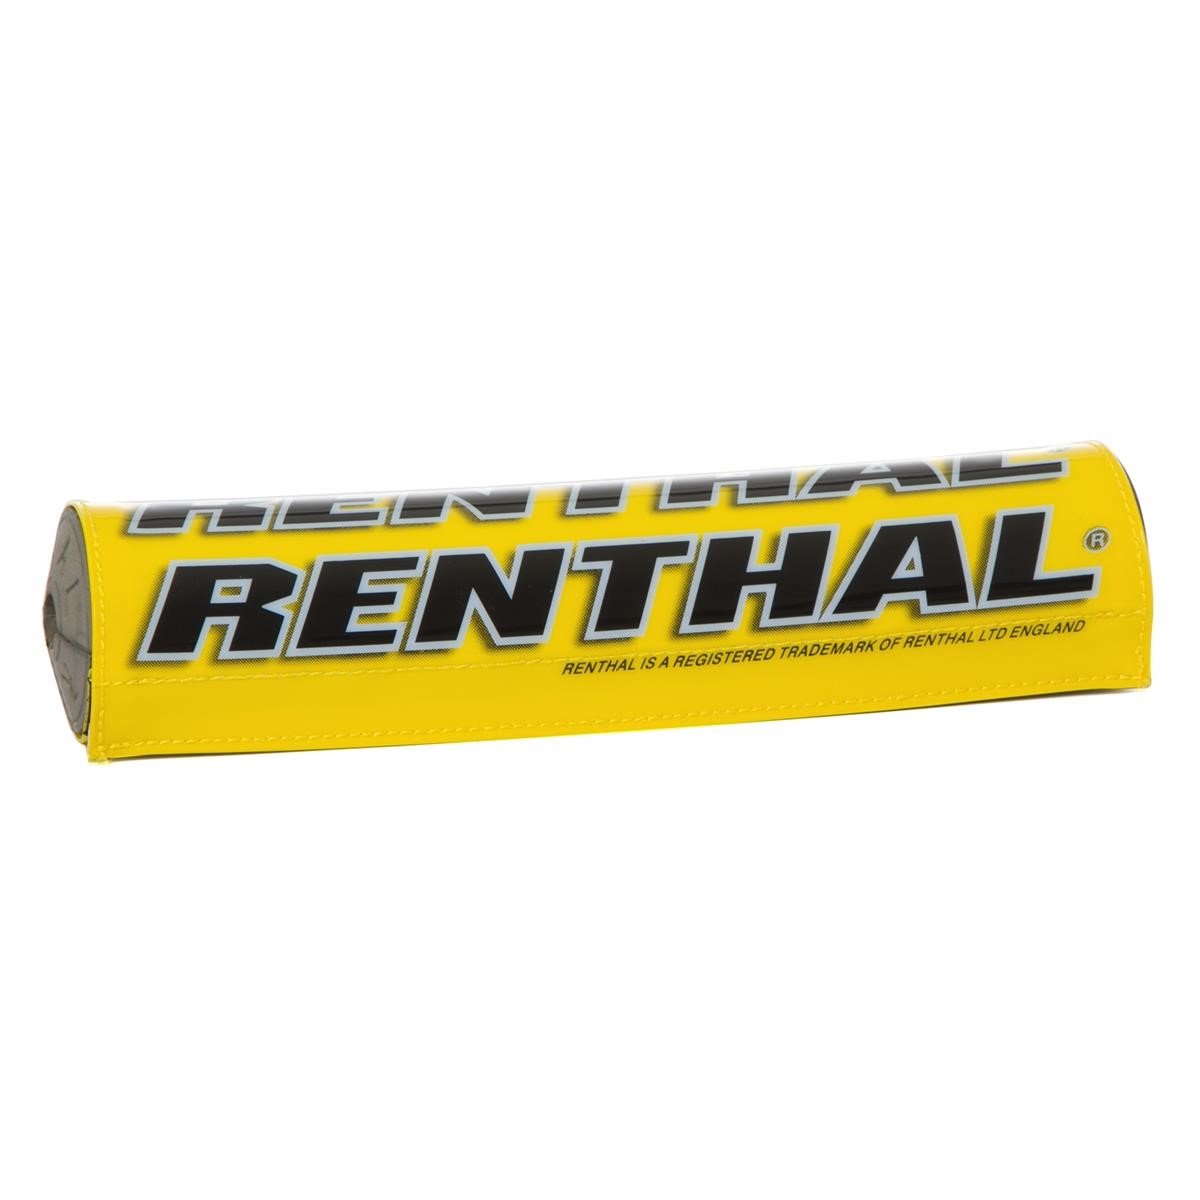 Renthal Bar Pad SX Yellow